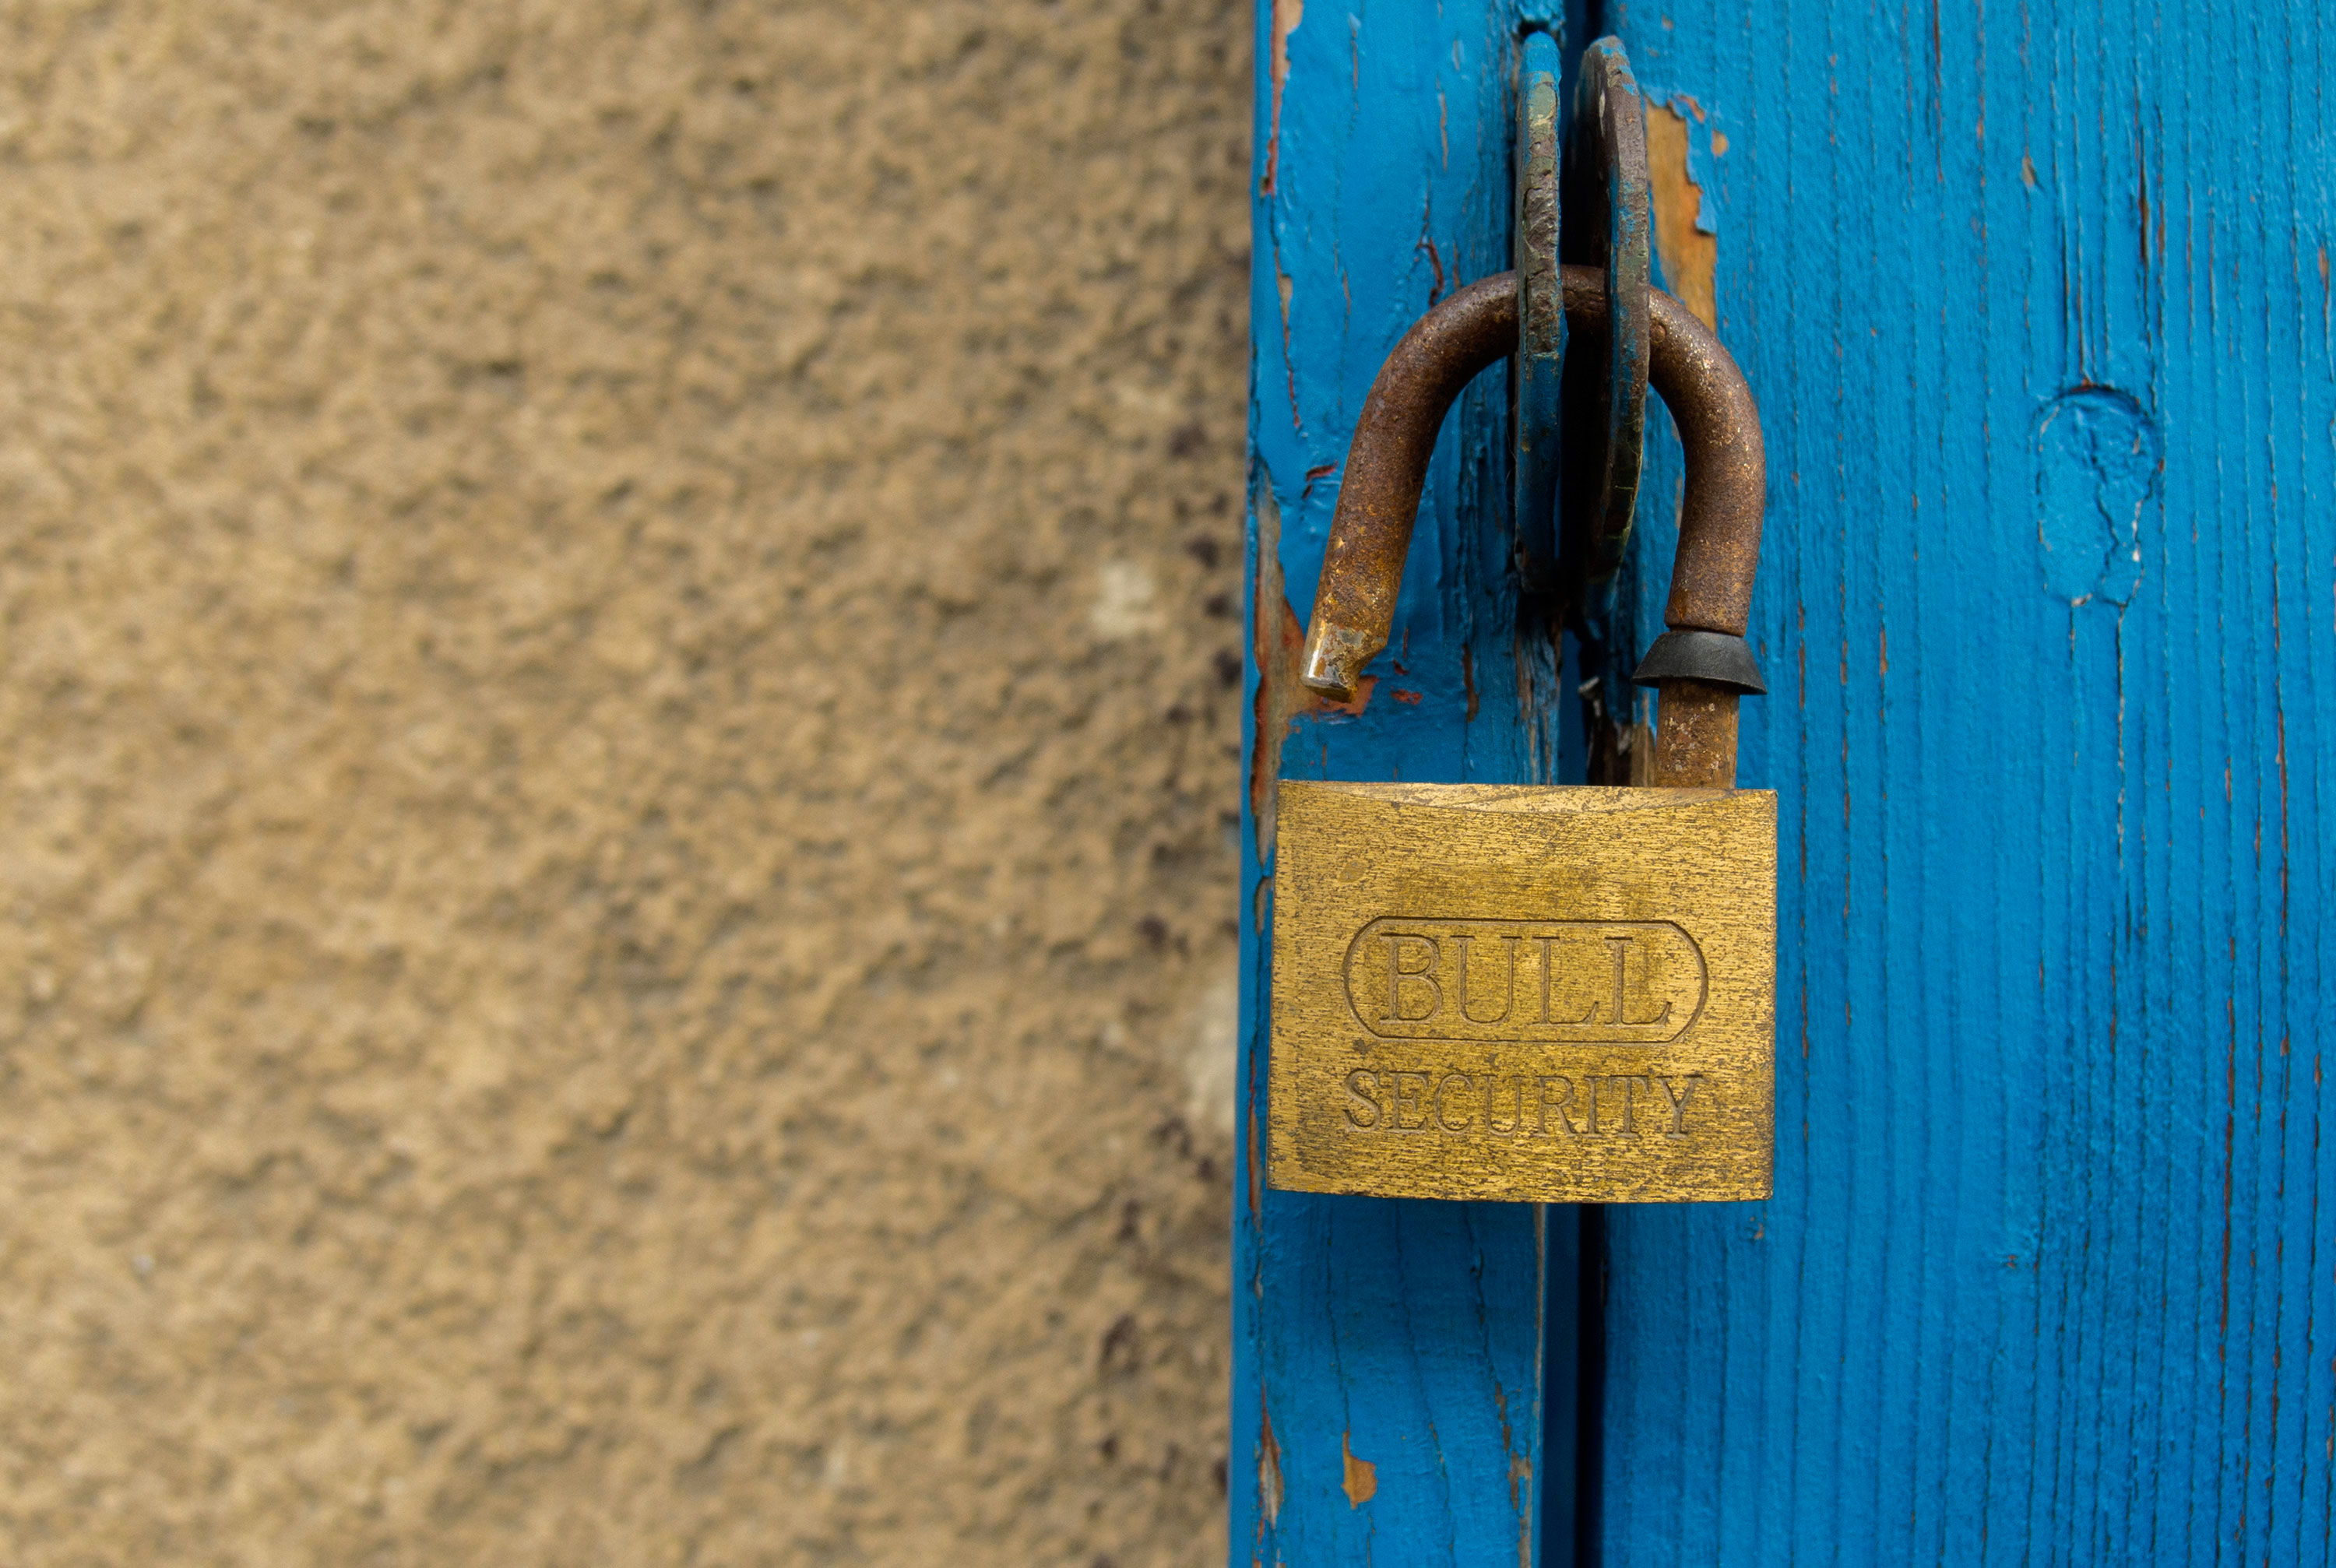 Free Image: Old door and an open padlock | Libreshot Public Domain ...